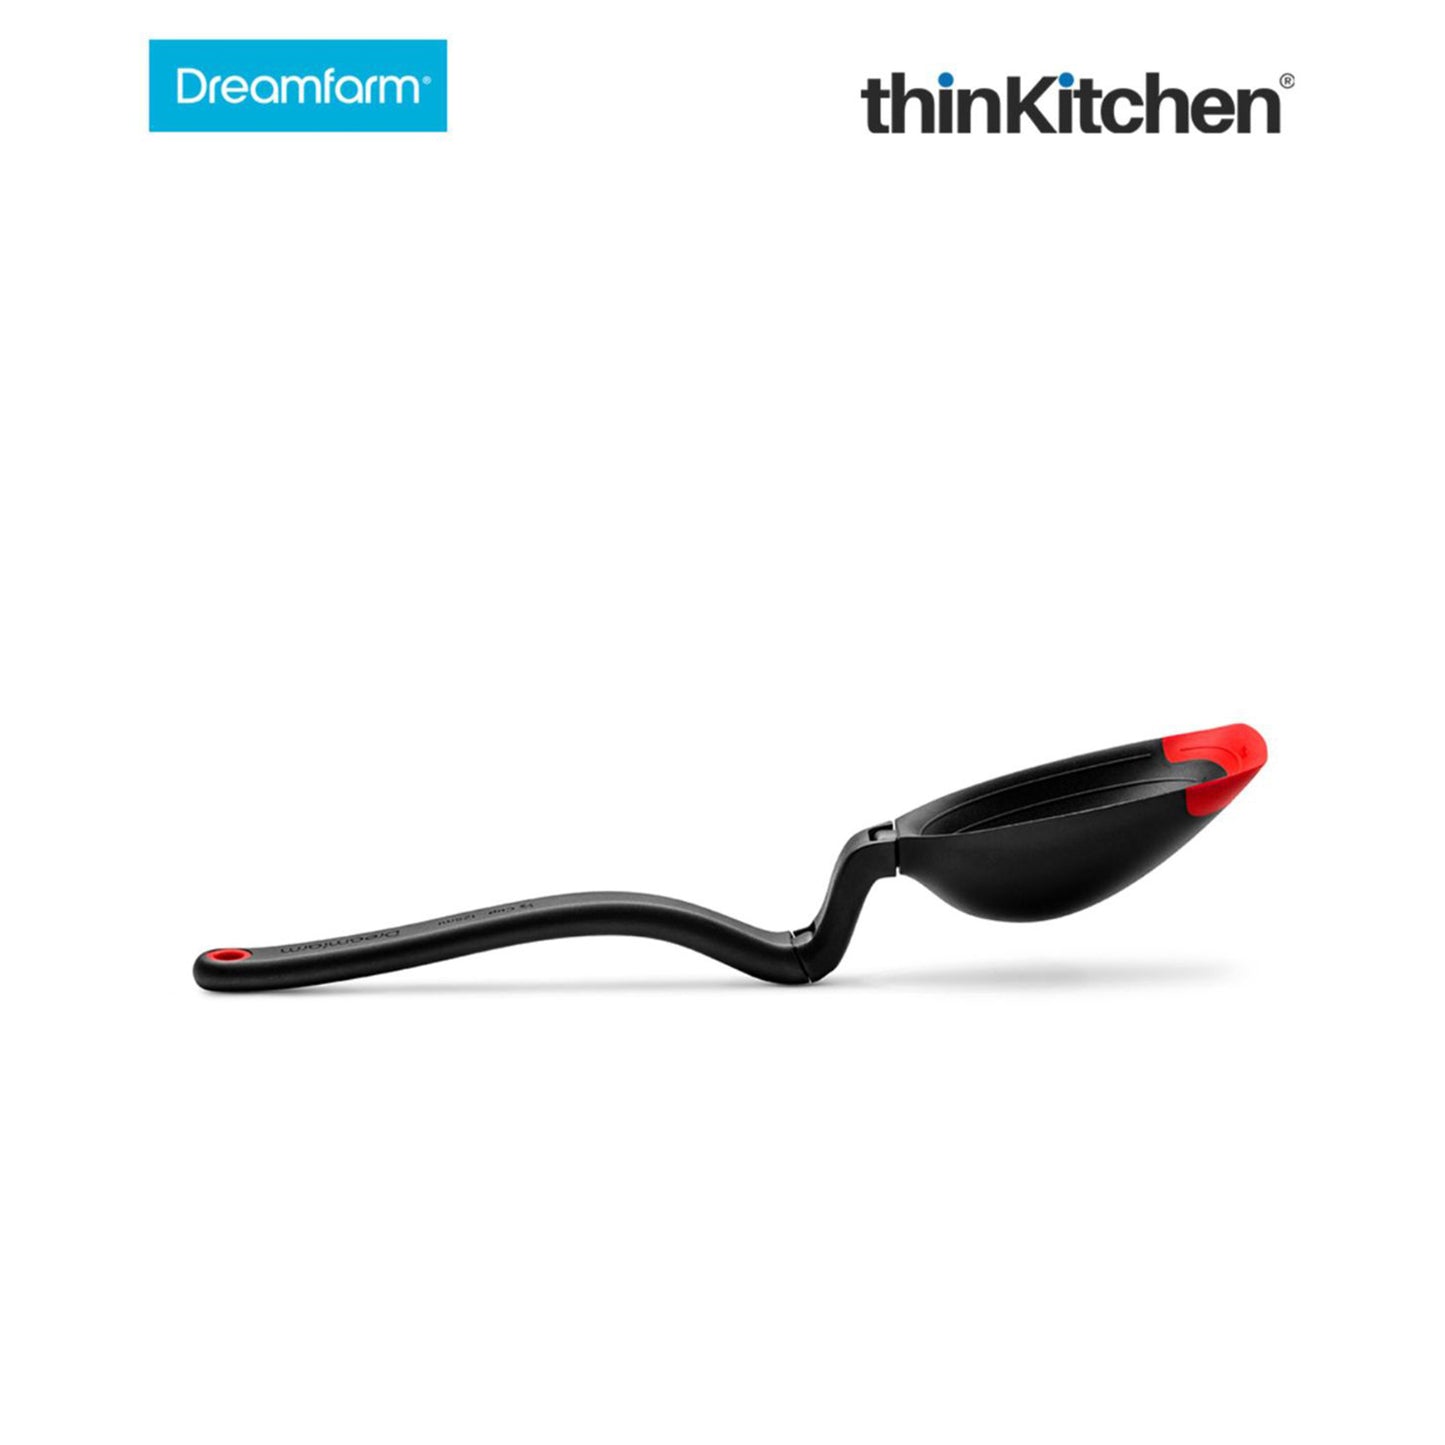 Dreamfarm Spadle Non Stick Cooking Spoon Serving Ladle With Measurements Red